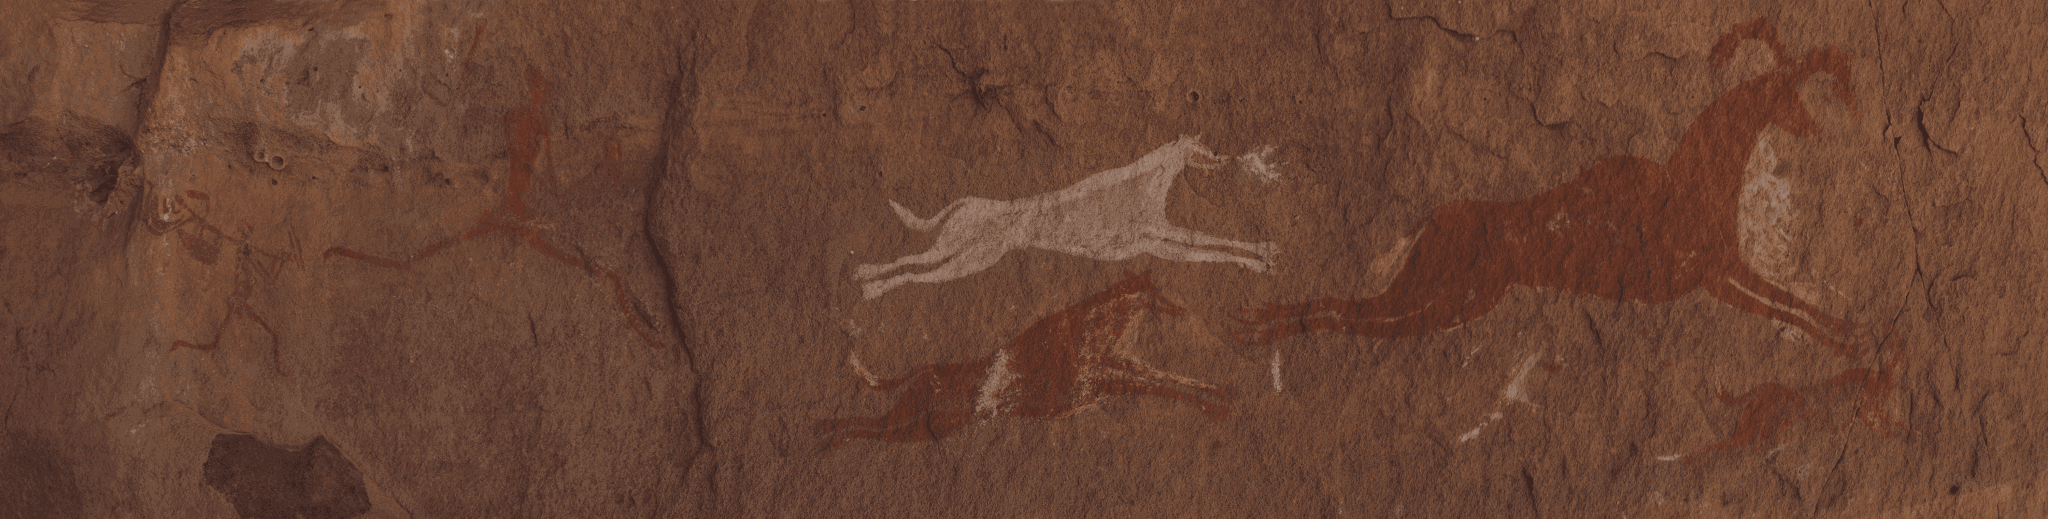 MomClone-Eat-Paleo-Diet-Cave-Drawing-Petroglyphs